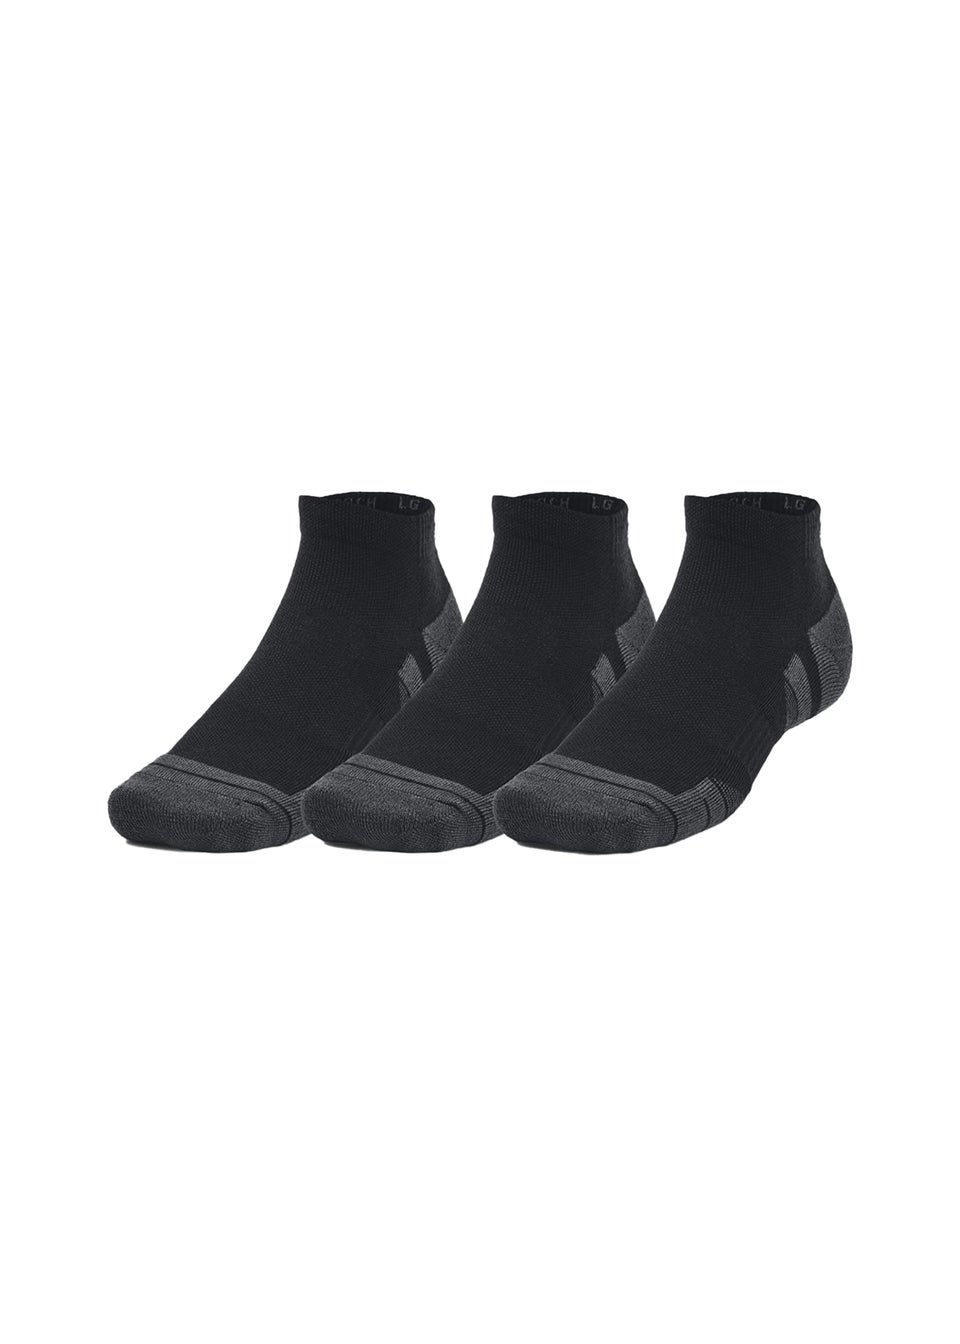 Under Armour Black Performance Tech Socks (Pack of 3)